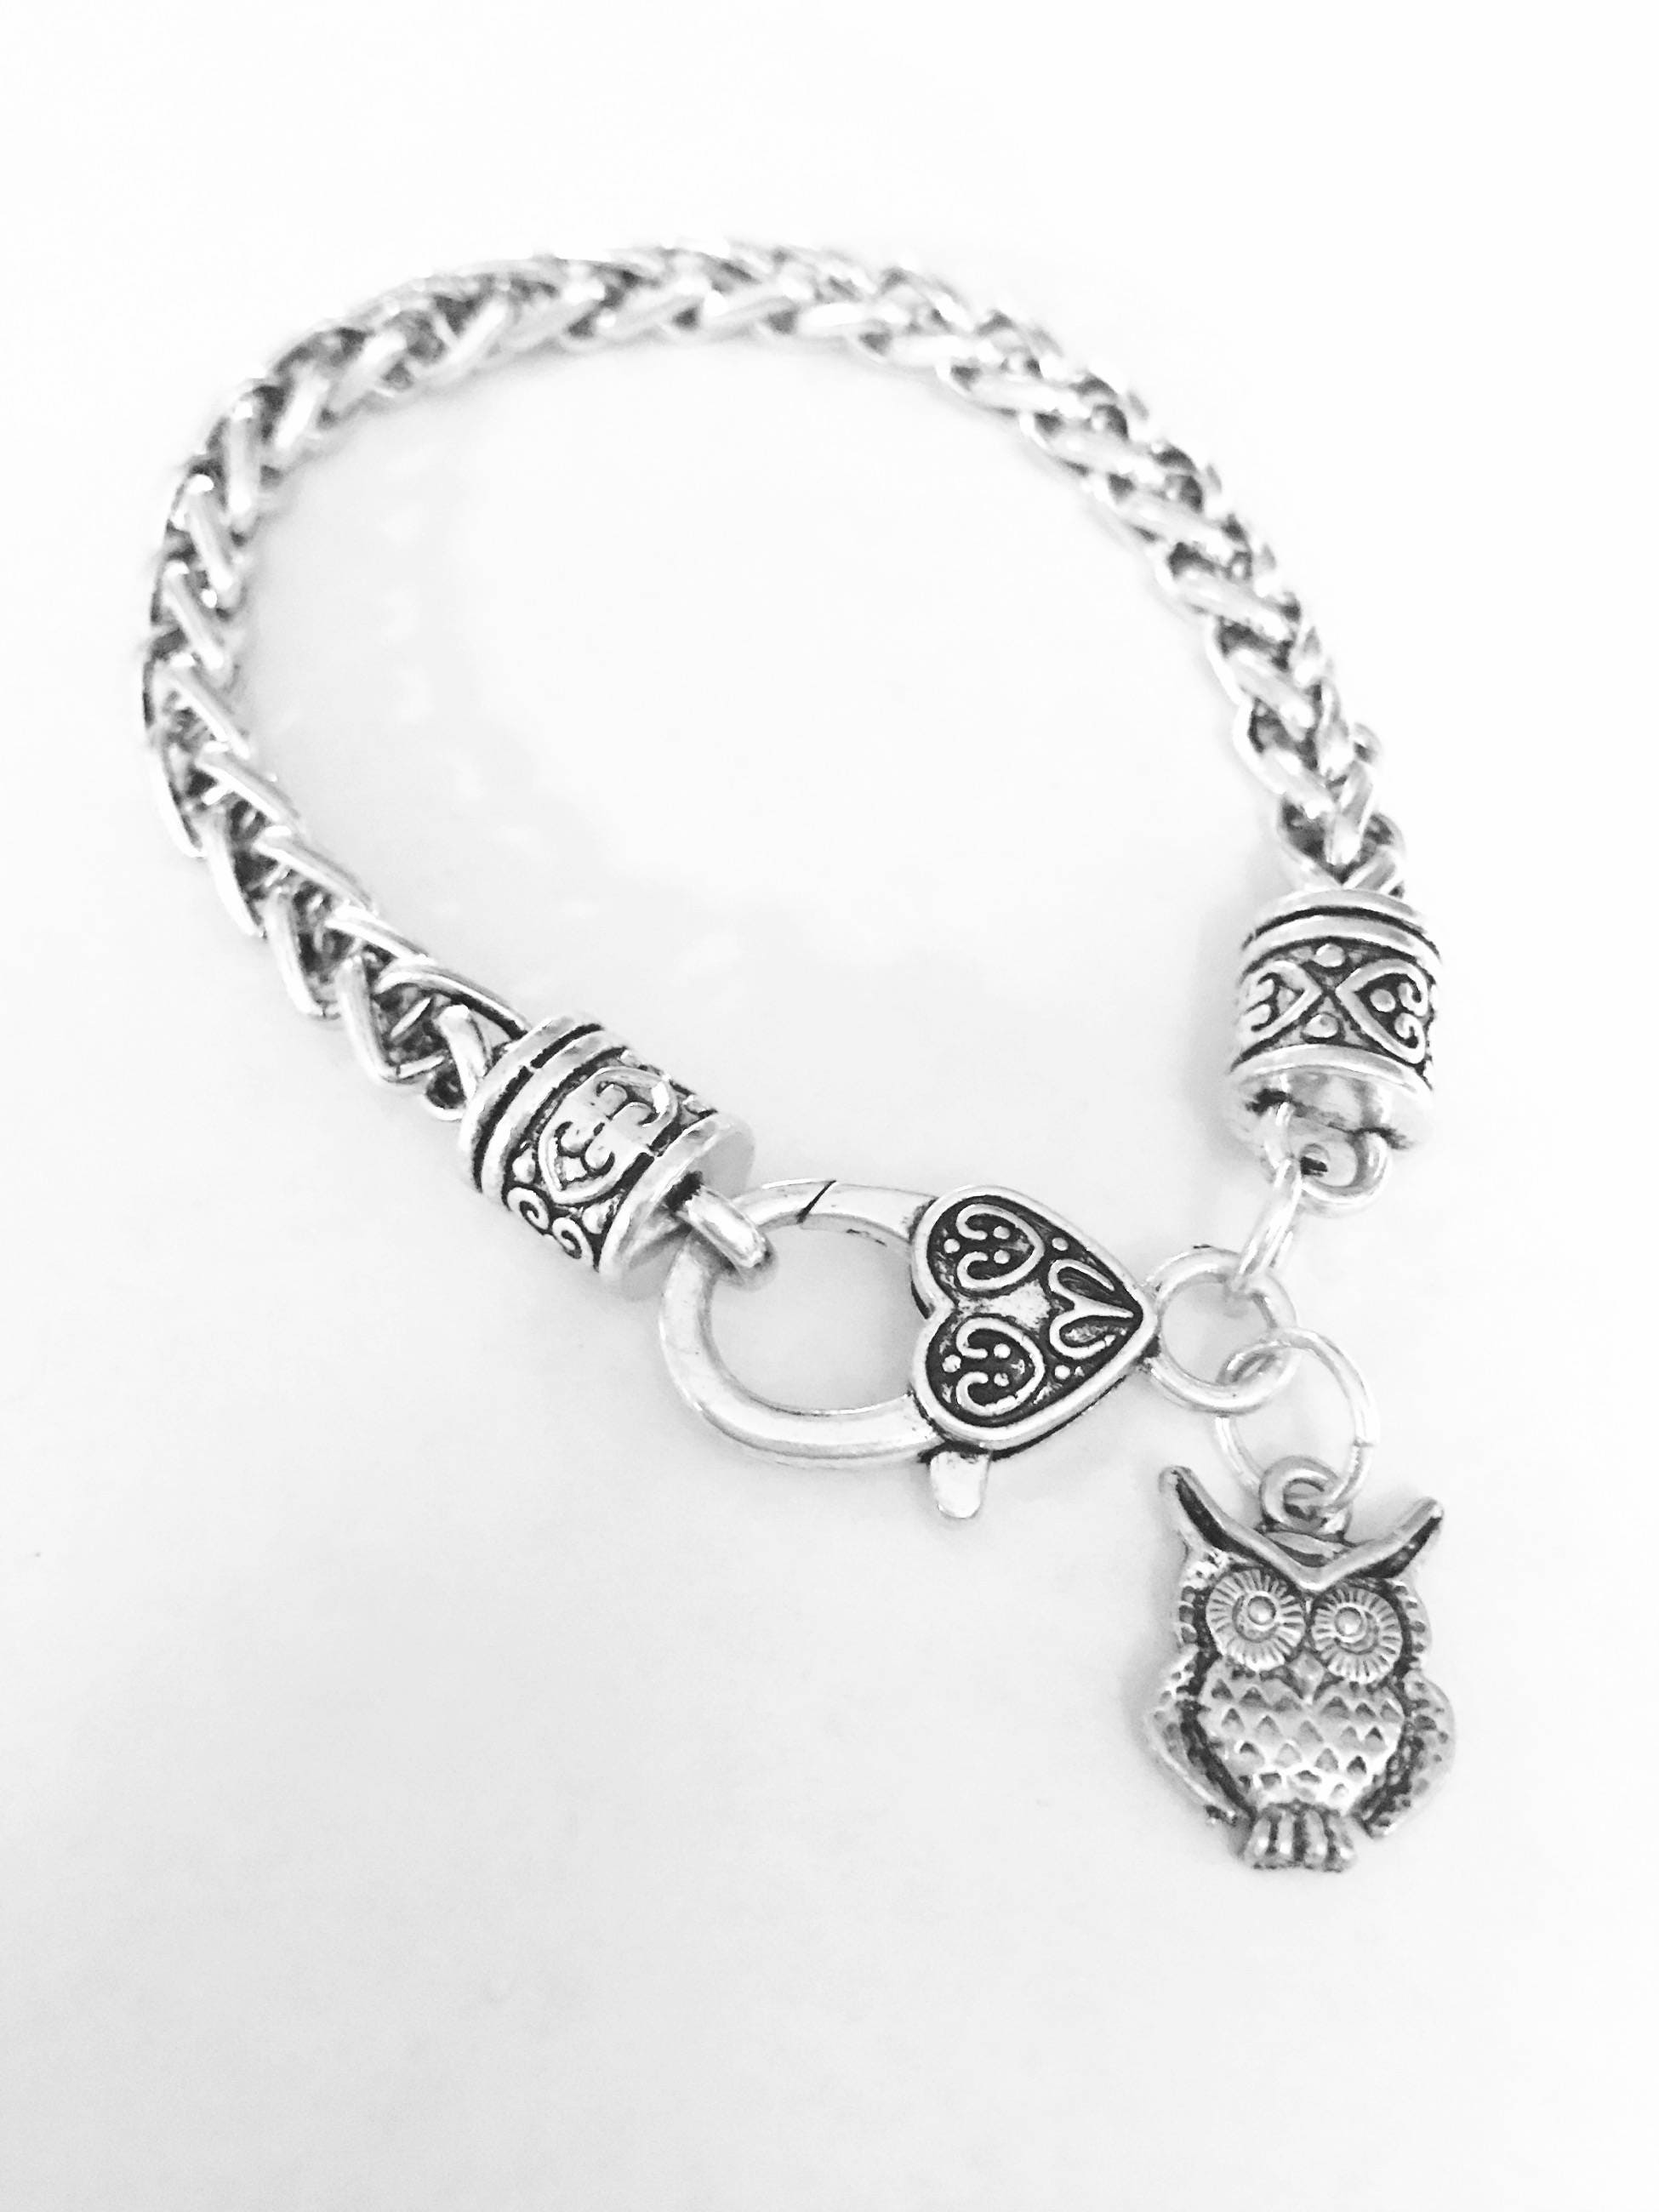 Gift For Her, Owl Charm Bracelet, Best Friend Gift, Animal Bracelet, Mother's Day Wife Daughter 